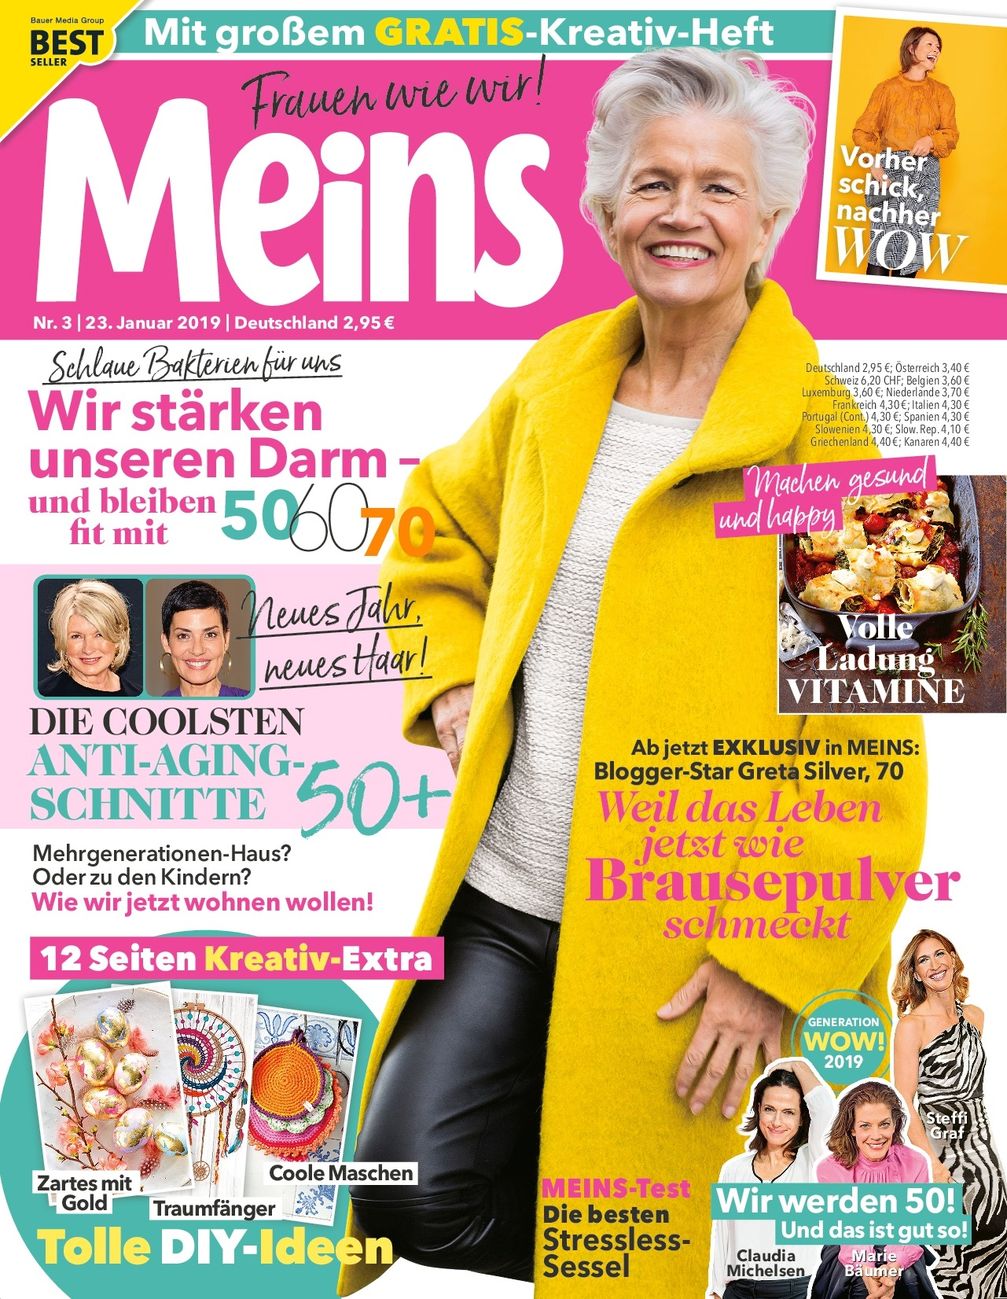 Cover Meins 03/19. Bild: "obs/Bauer Media Group, Meins"